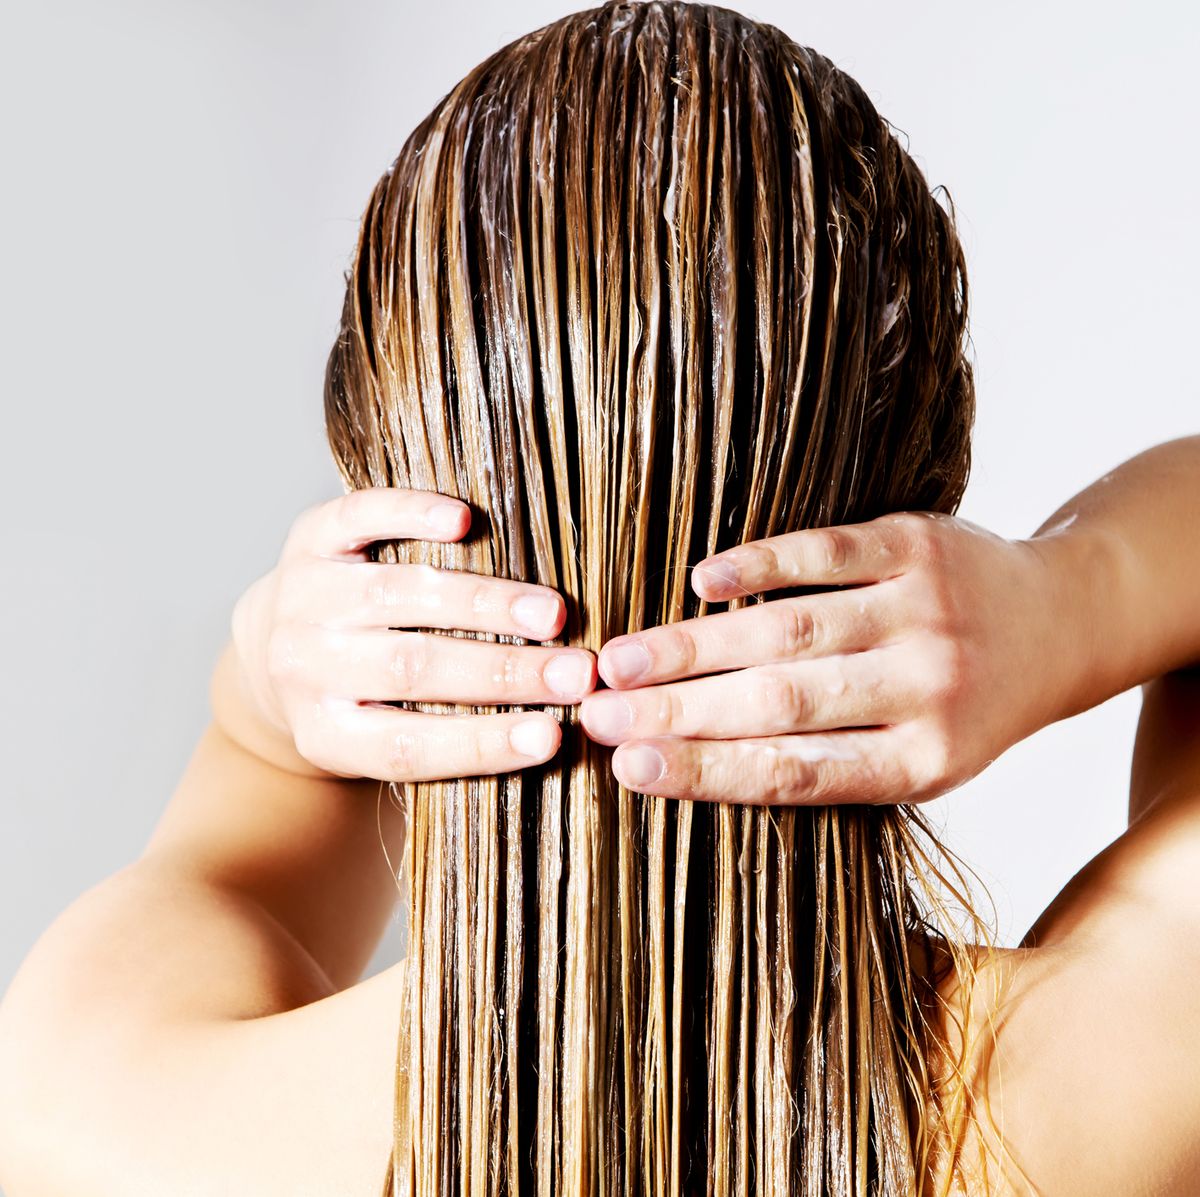 How to Exfoliate Your Scalp - Scalp Exfoliators for Healthier Hair